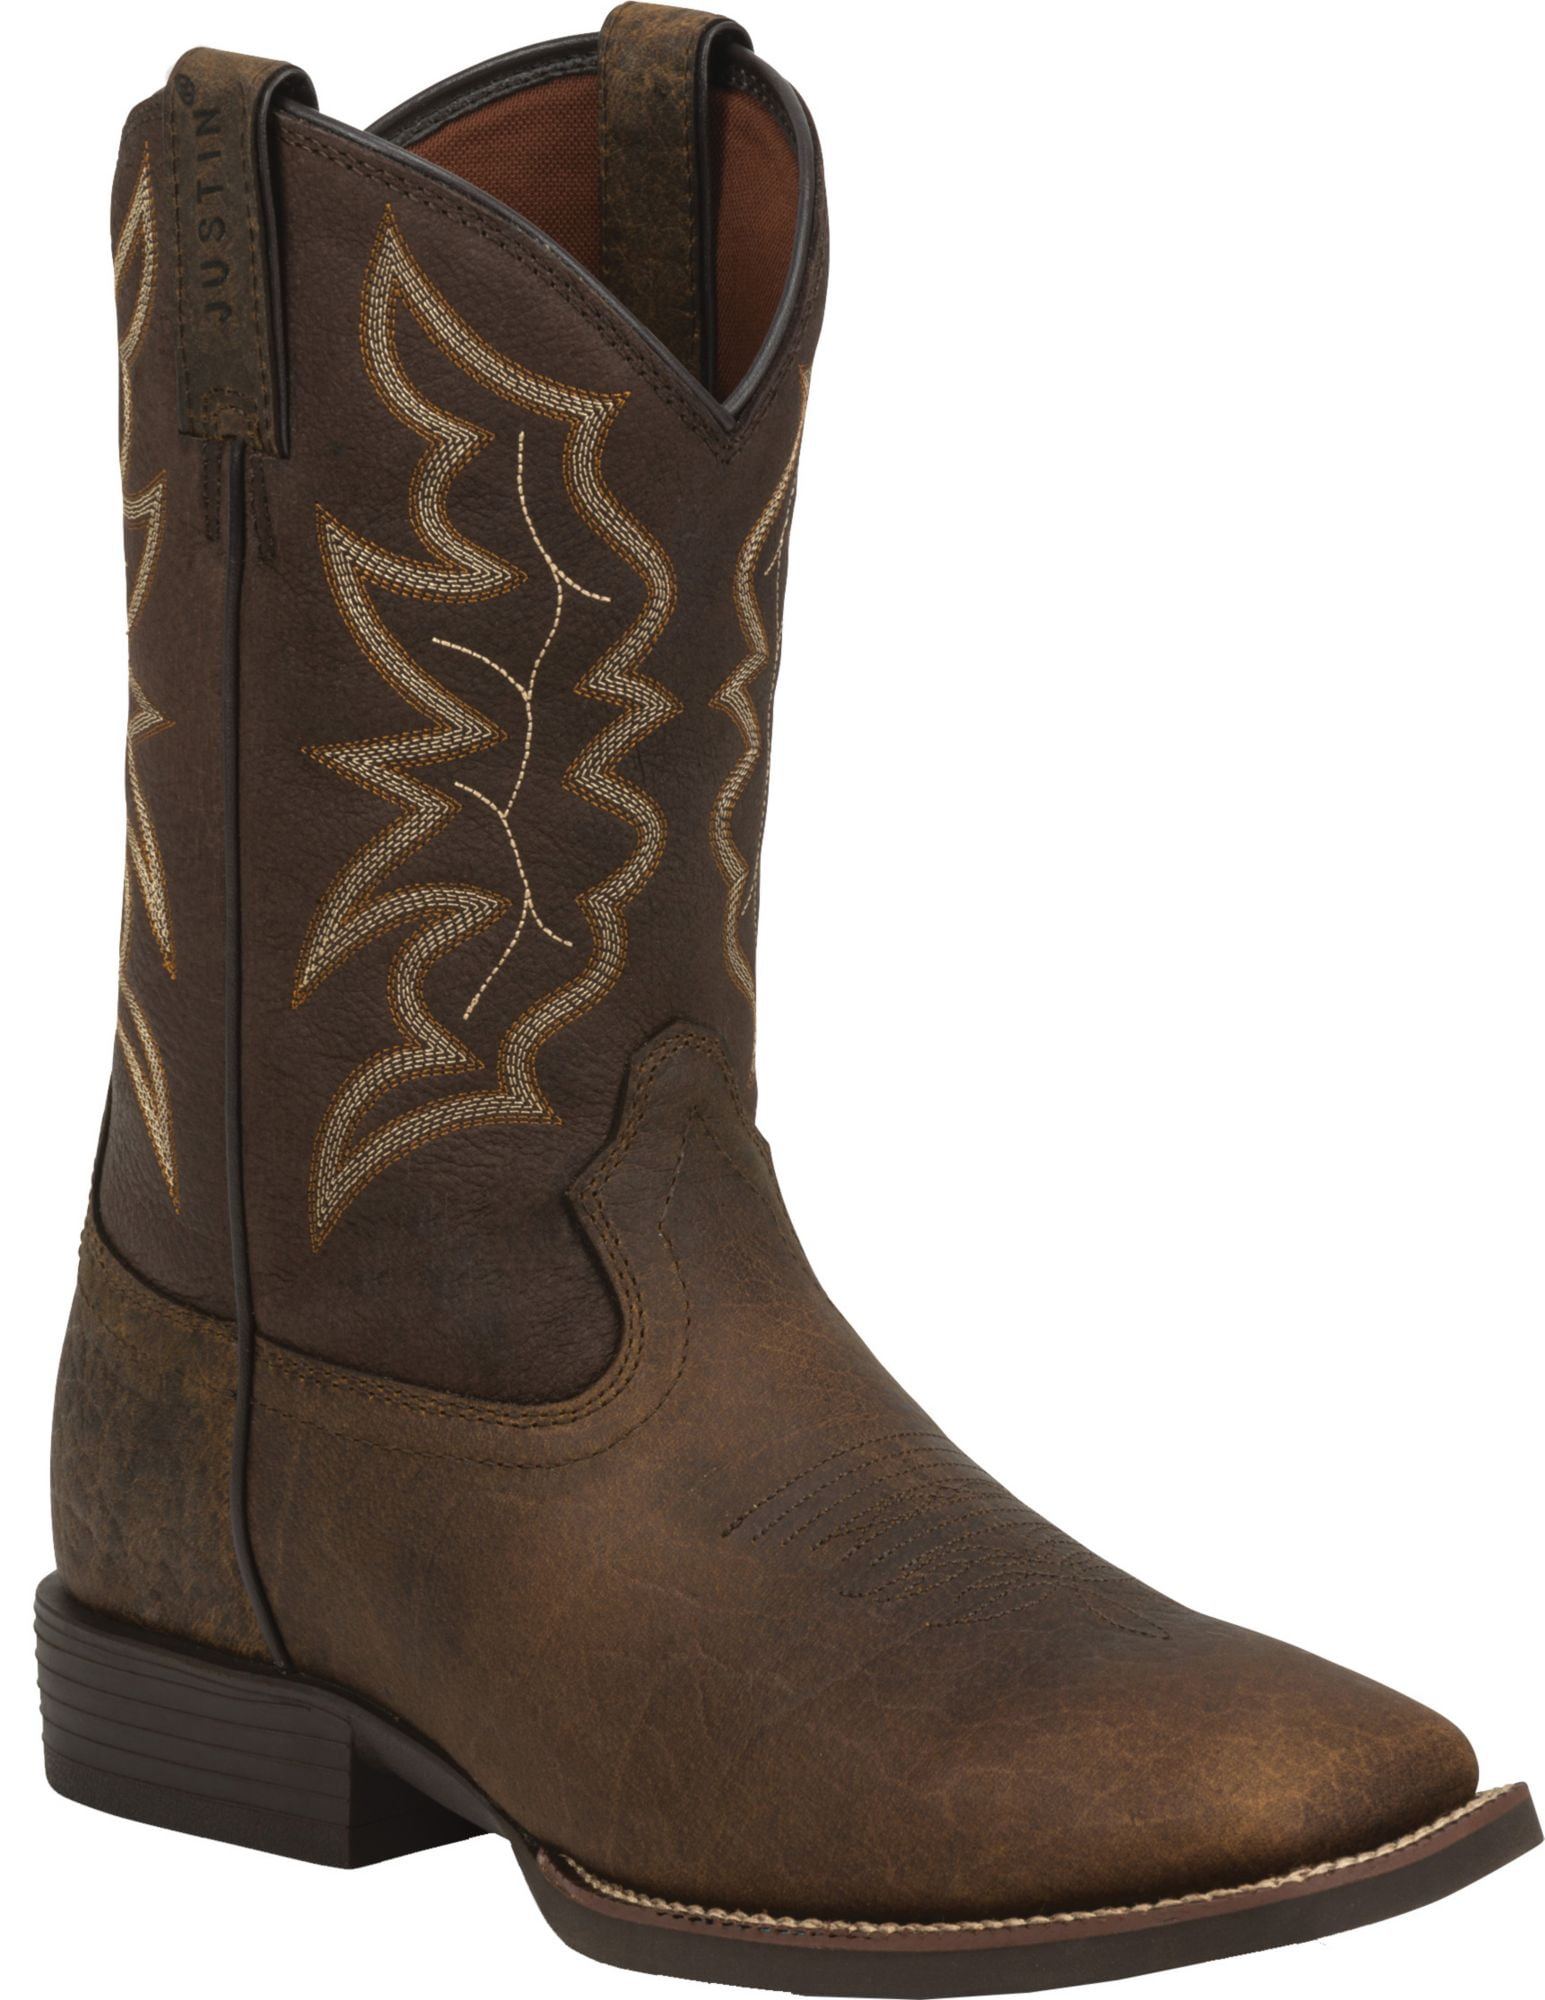 Chet Western Boots - Walmart.com 